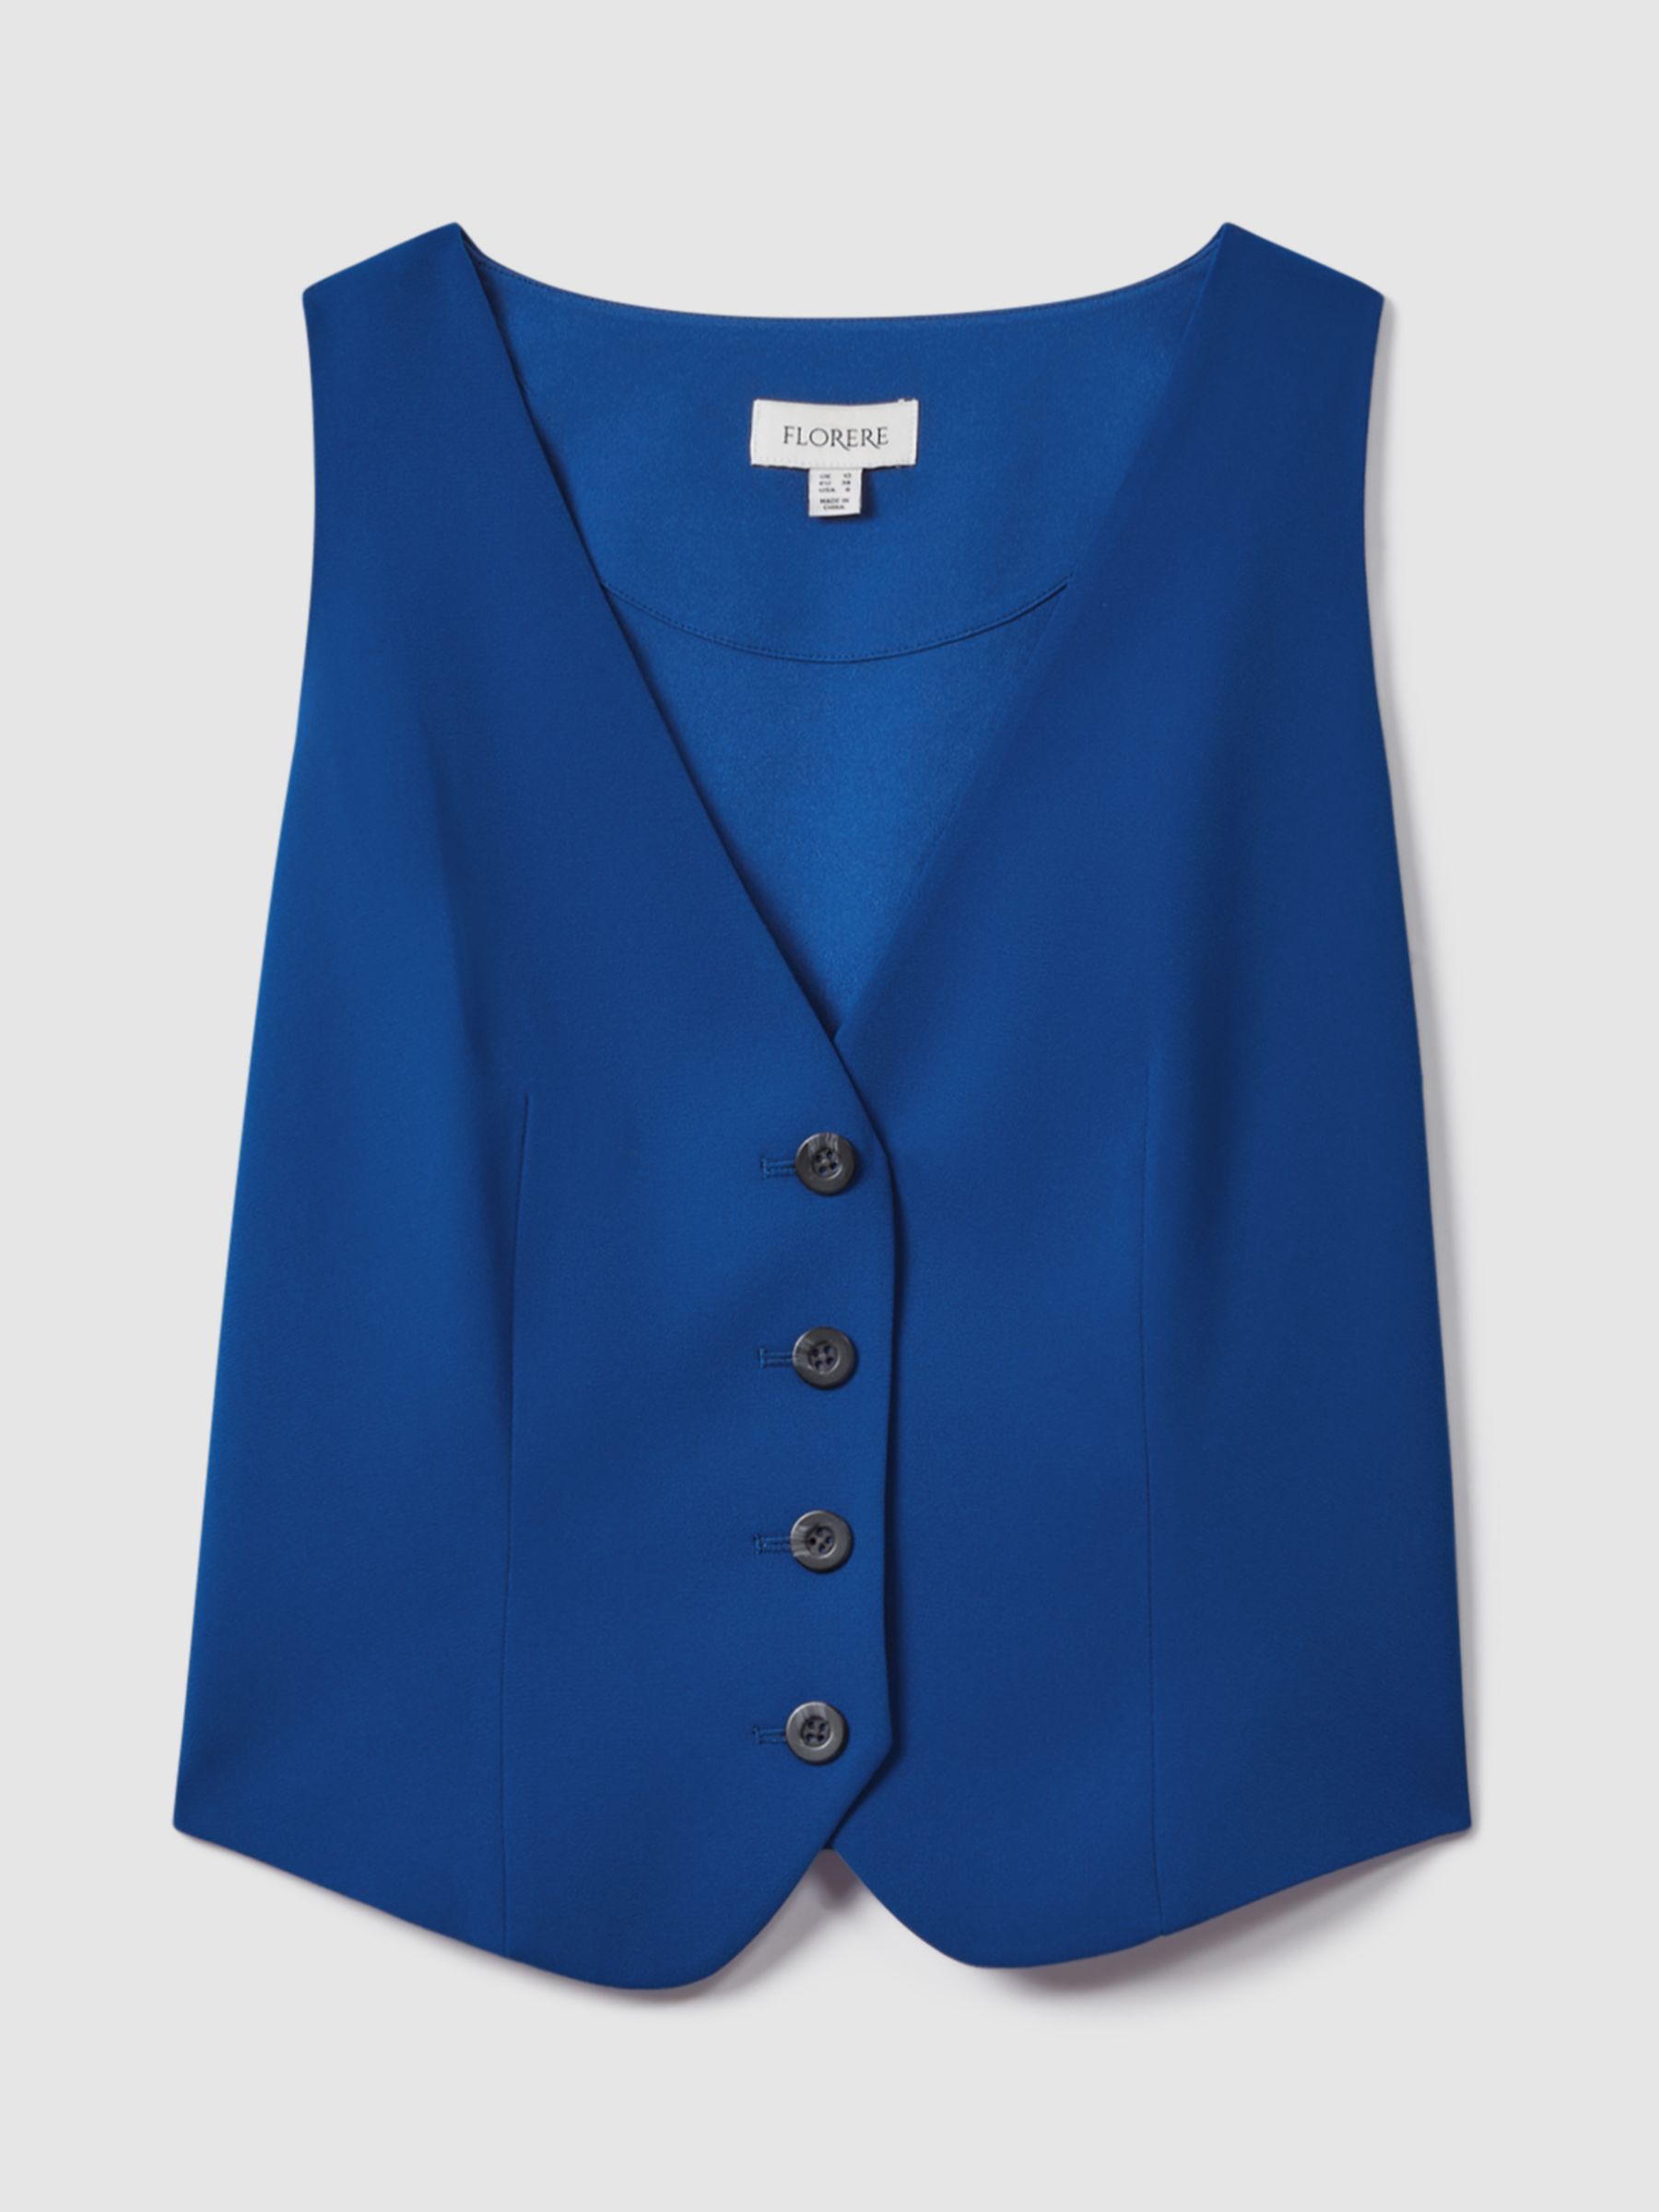 FLORERE Tailored Waistcoat, Bright Blue, 8